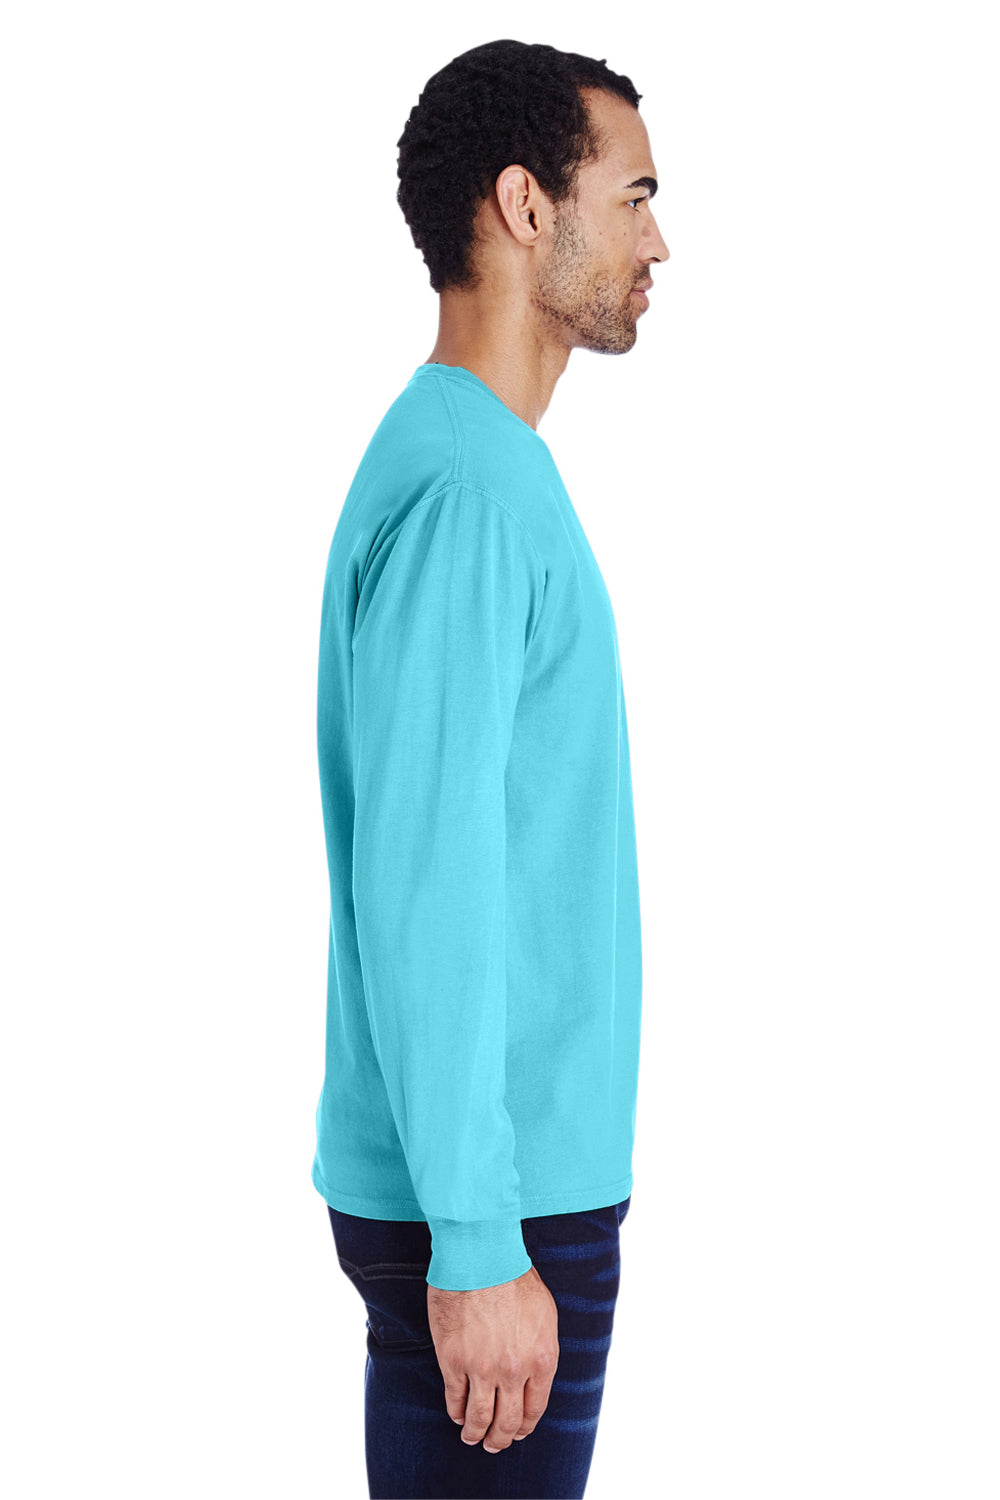 ComfortWash by Hanes GDH250 Long Sleeve Crewneck T-Shirt w/ Pocket Freshwater Blue Side